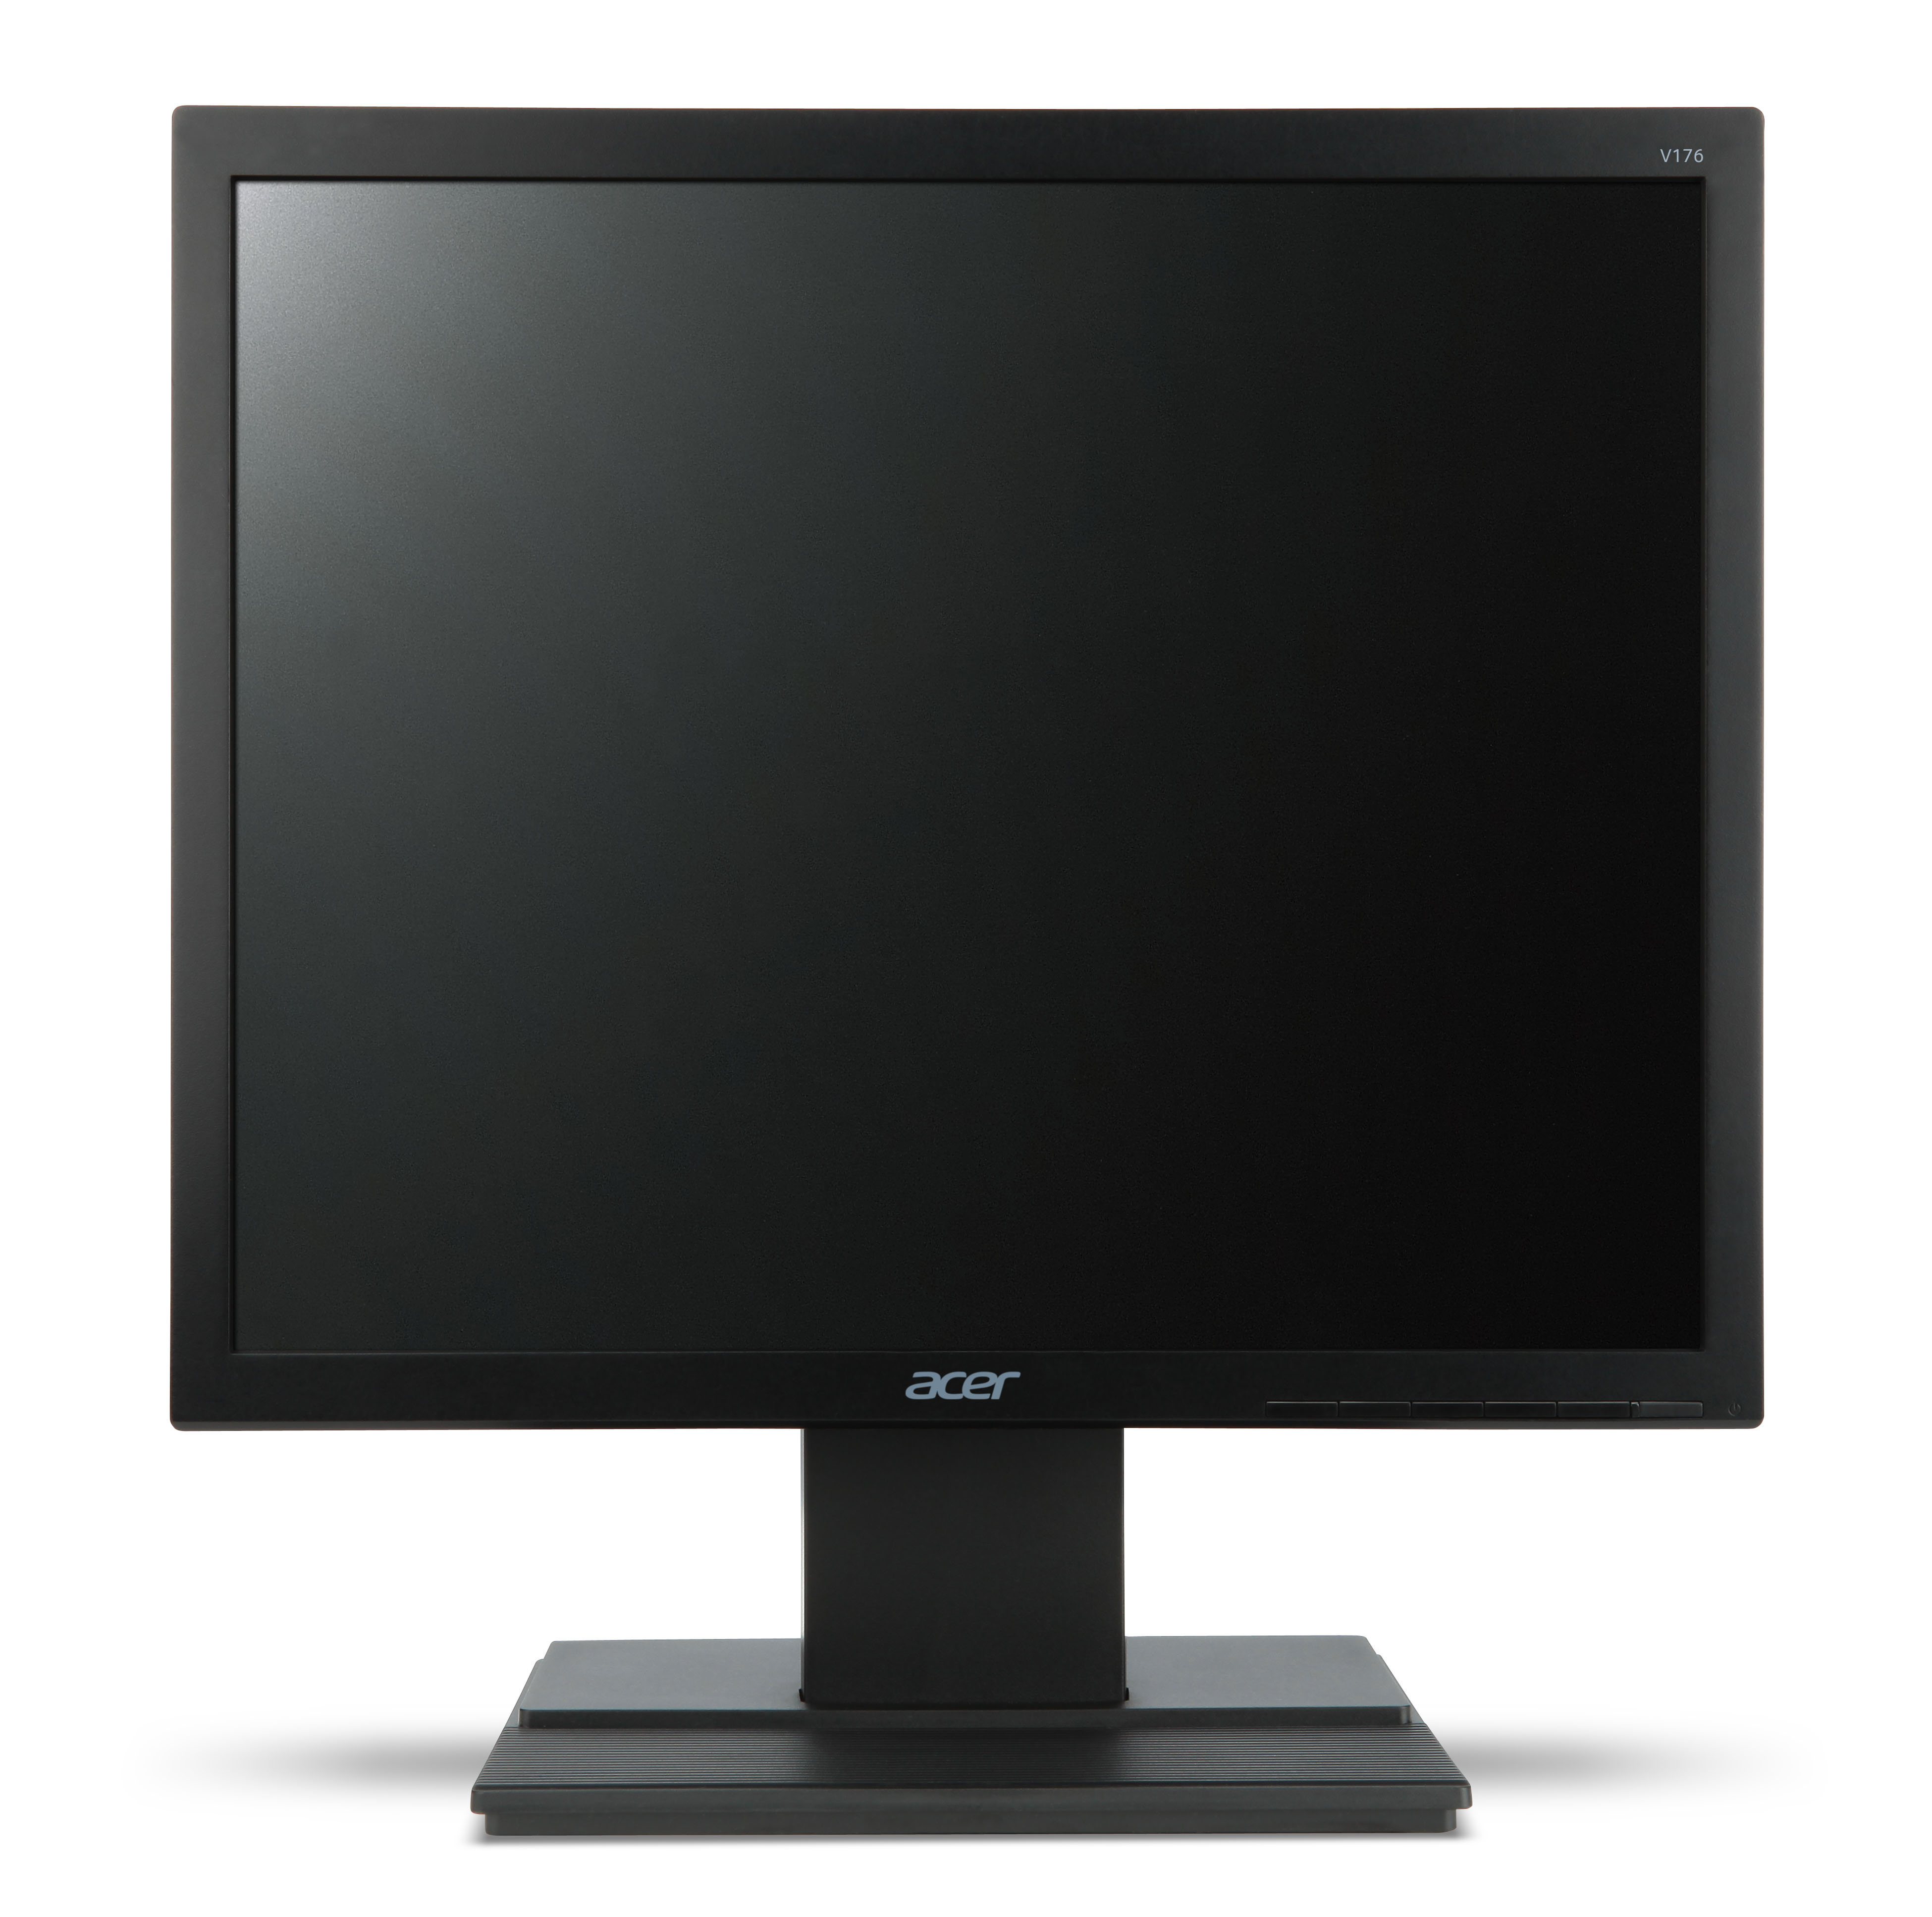 Acer 17 L V176Lbmd - 17" Zoll - 1280 x 1024